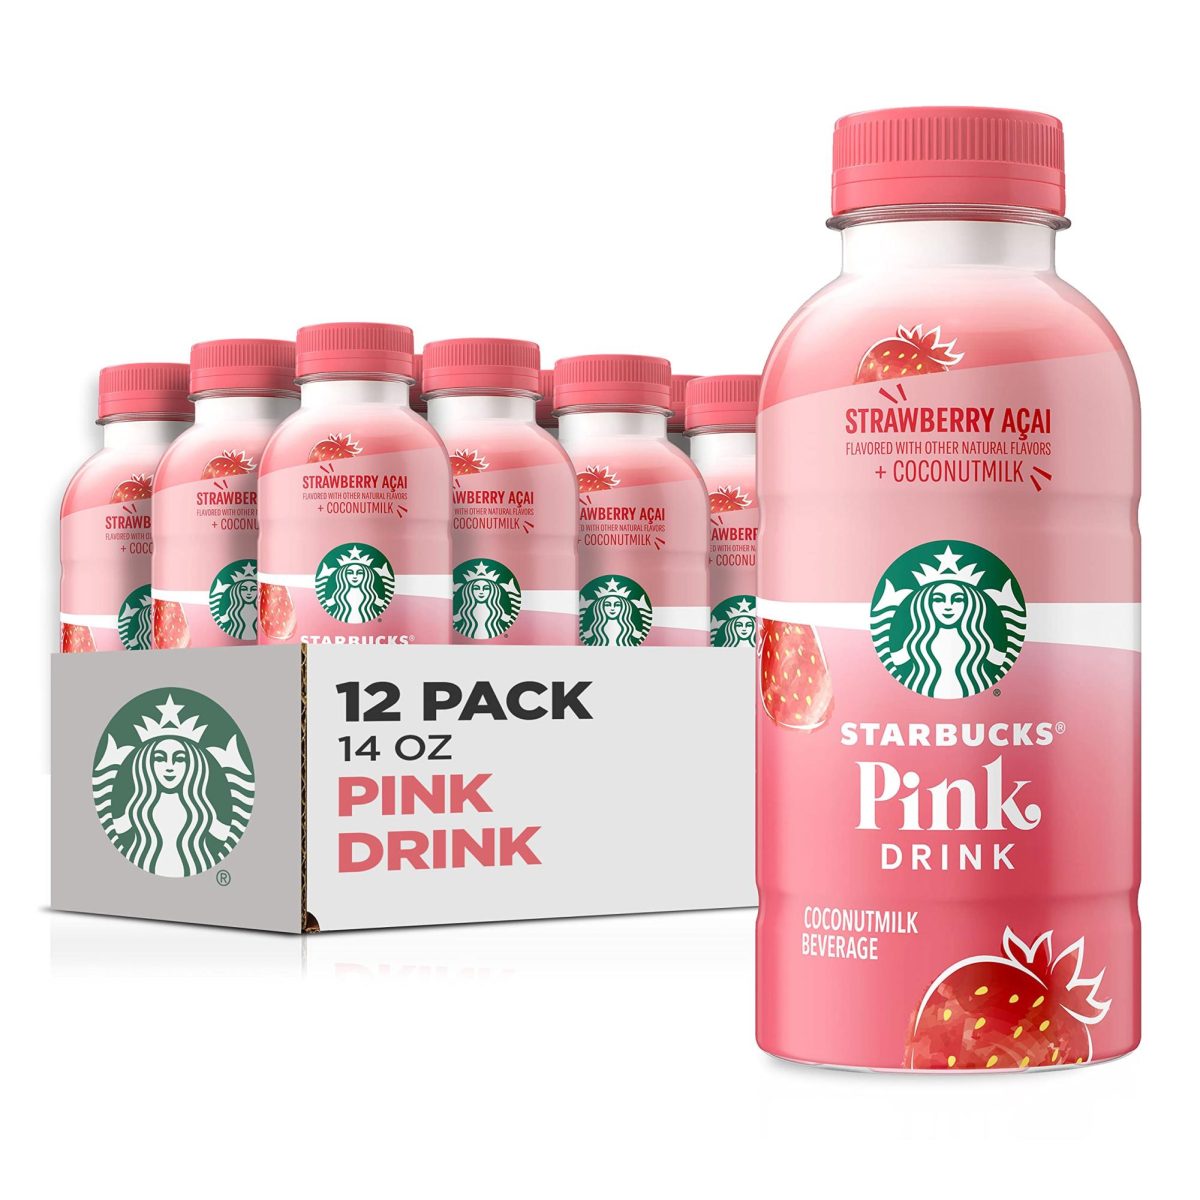 New pink drink stinks